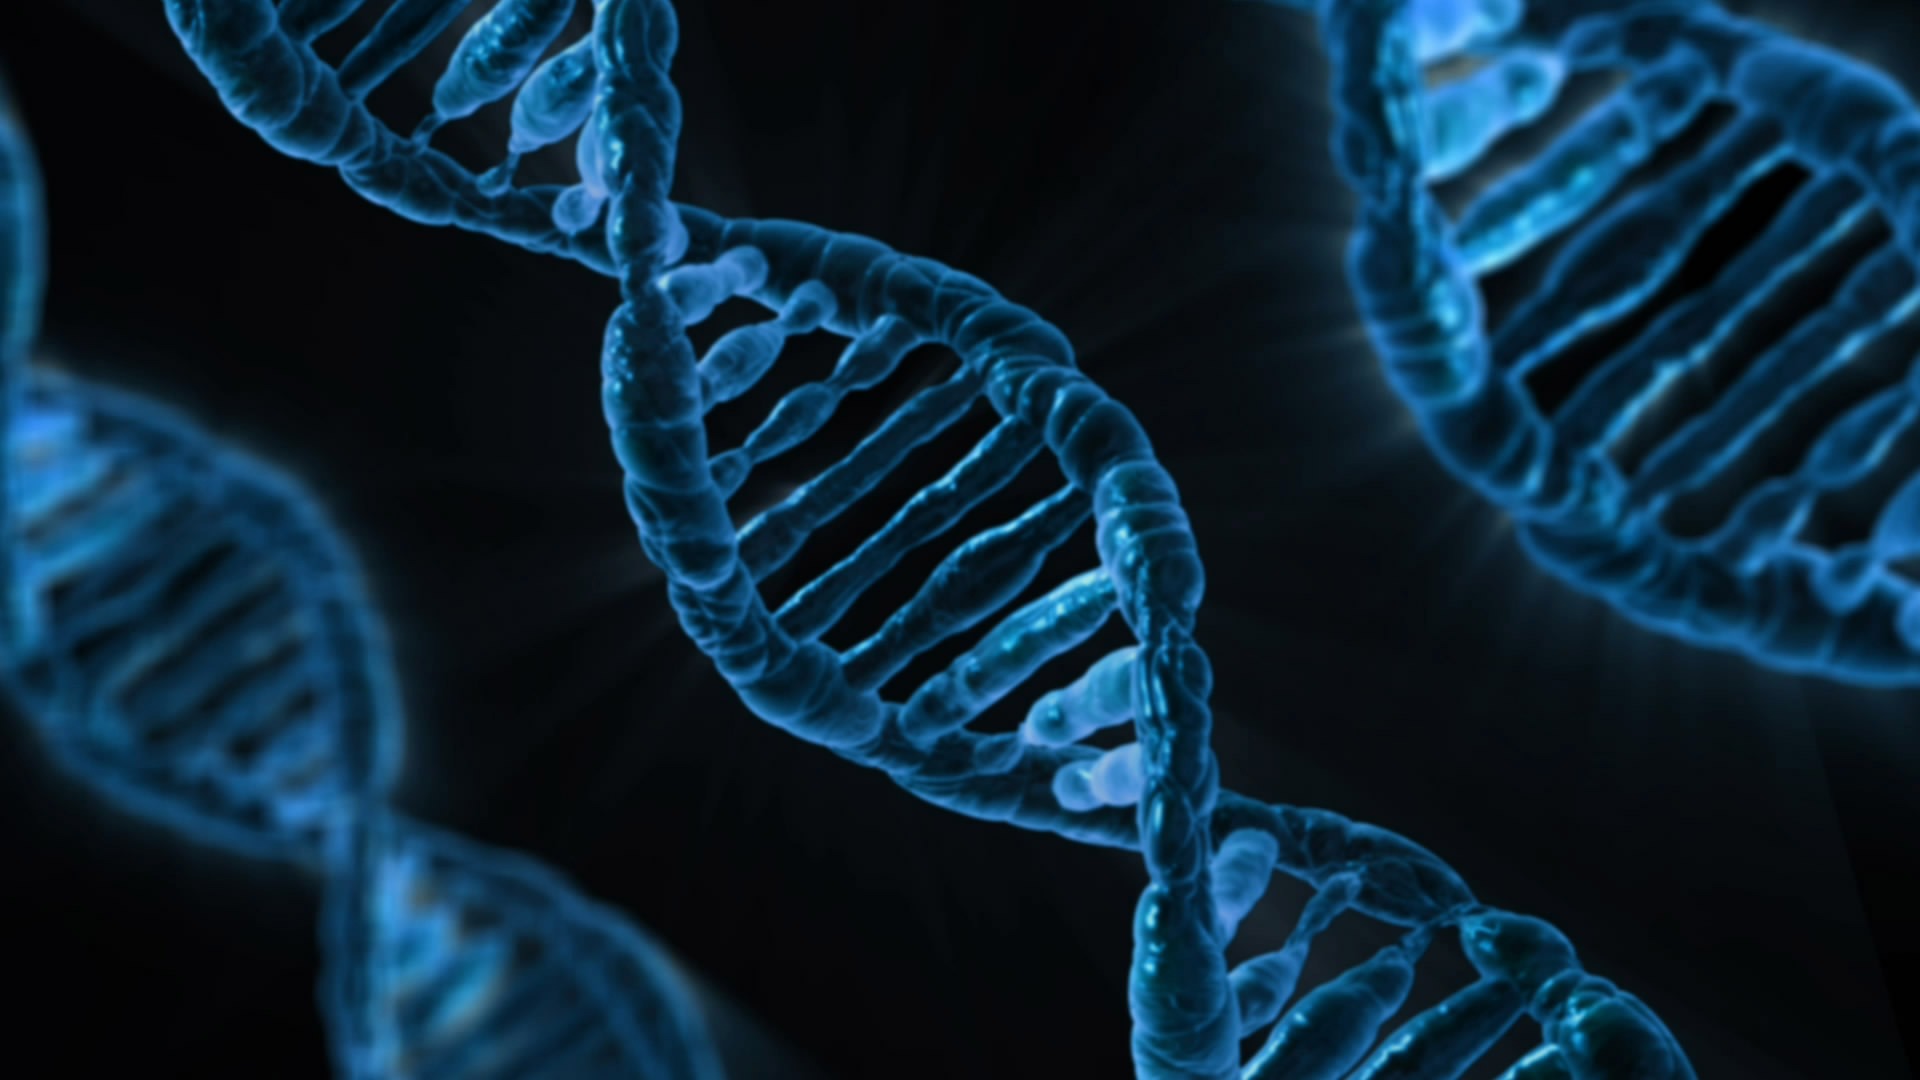 DNA gene editing